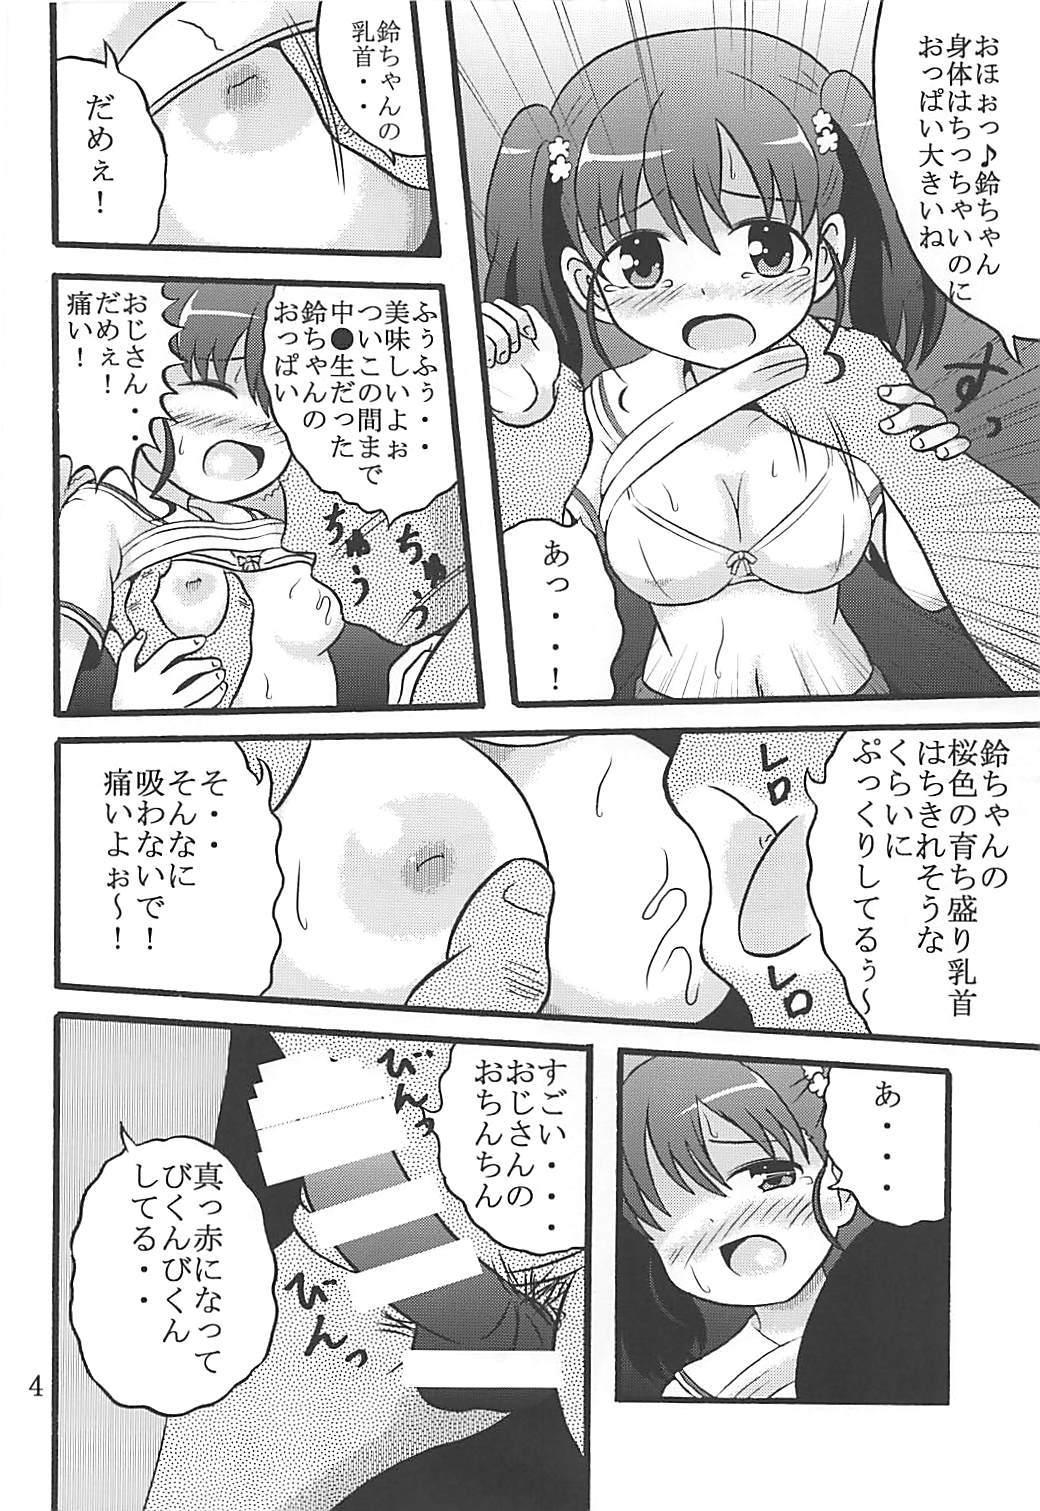 Group Naisho no Koukai Nisshi - High school fleet Butt - Page 5